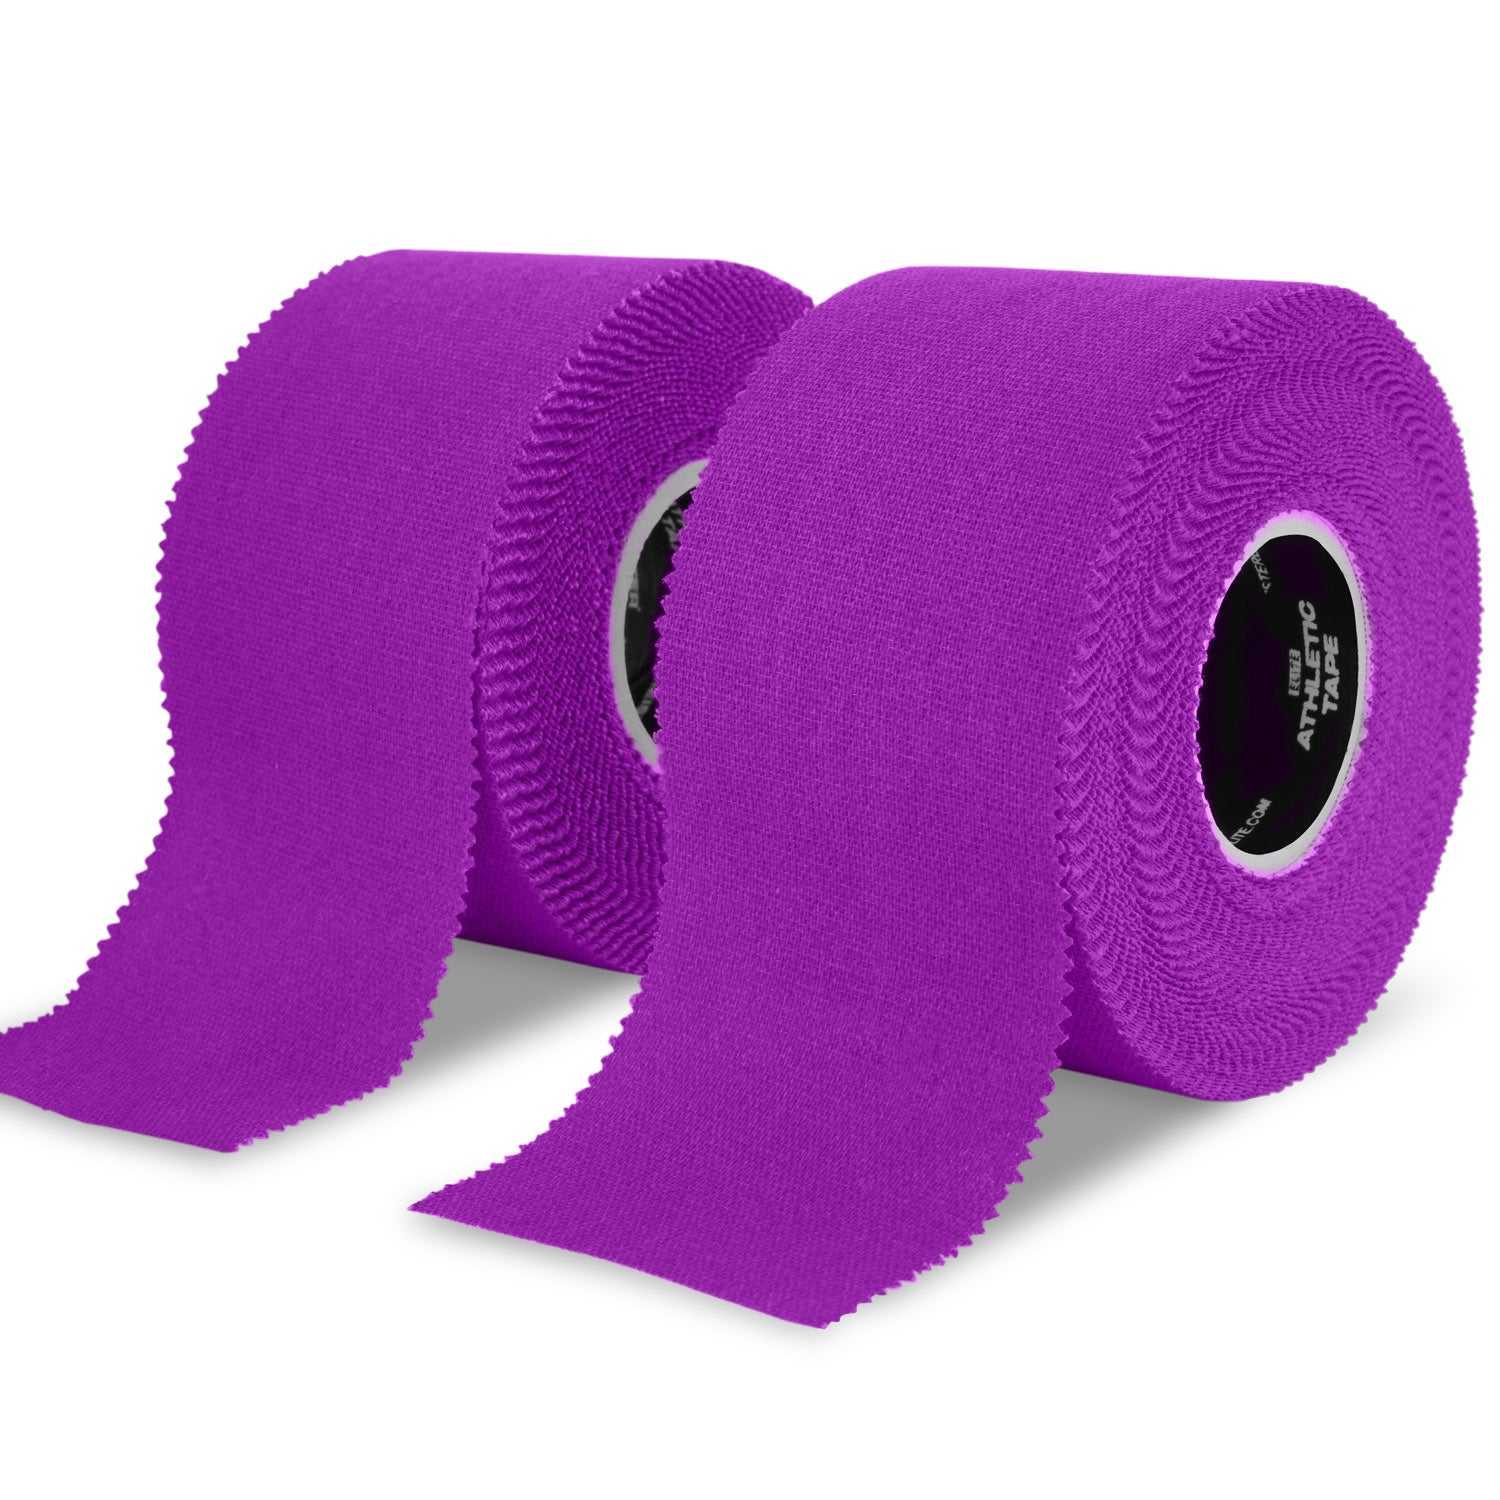 Meister Elite Porous Athletic Tape - 2 Roll Pack - Purple